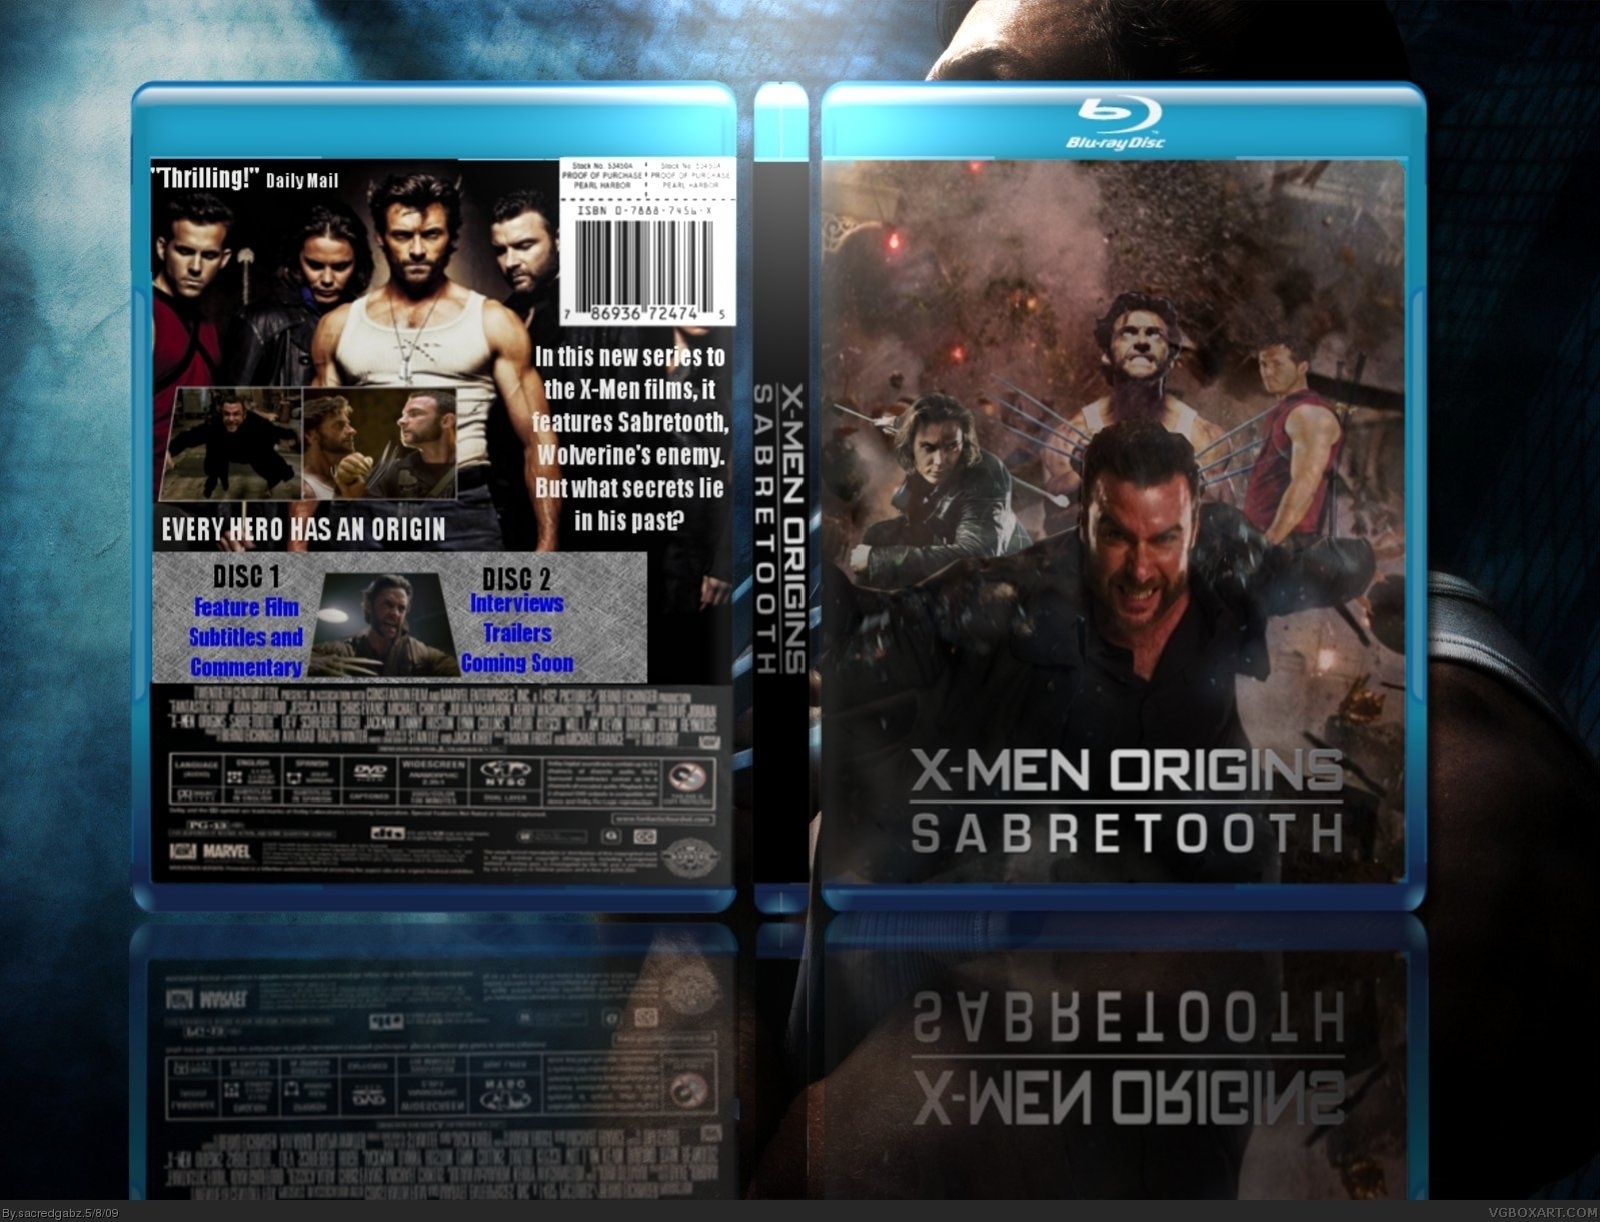 X-Men Origins: Sabretooth box cover